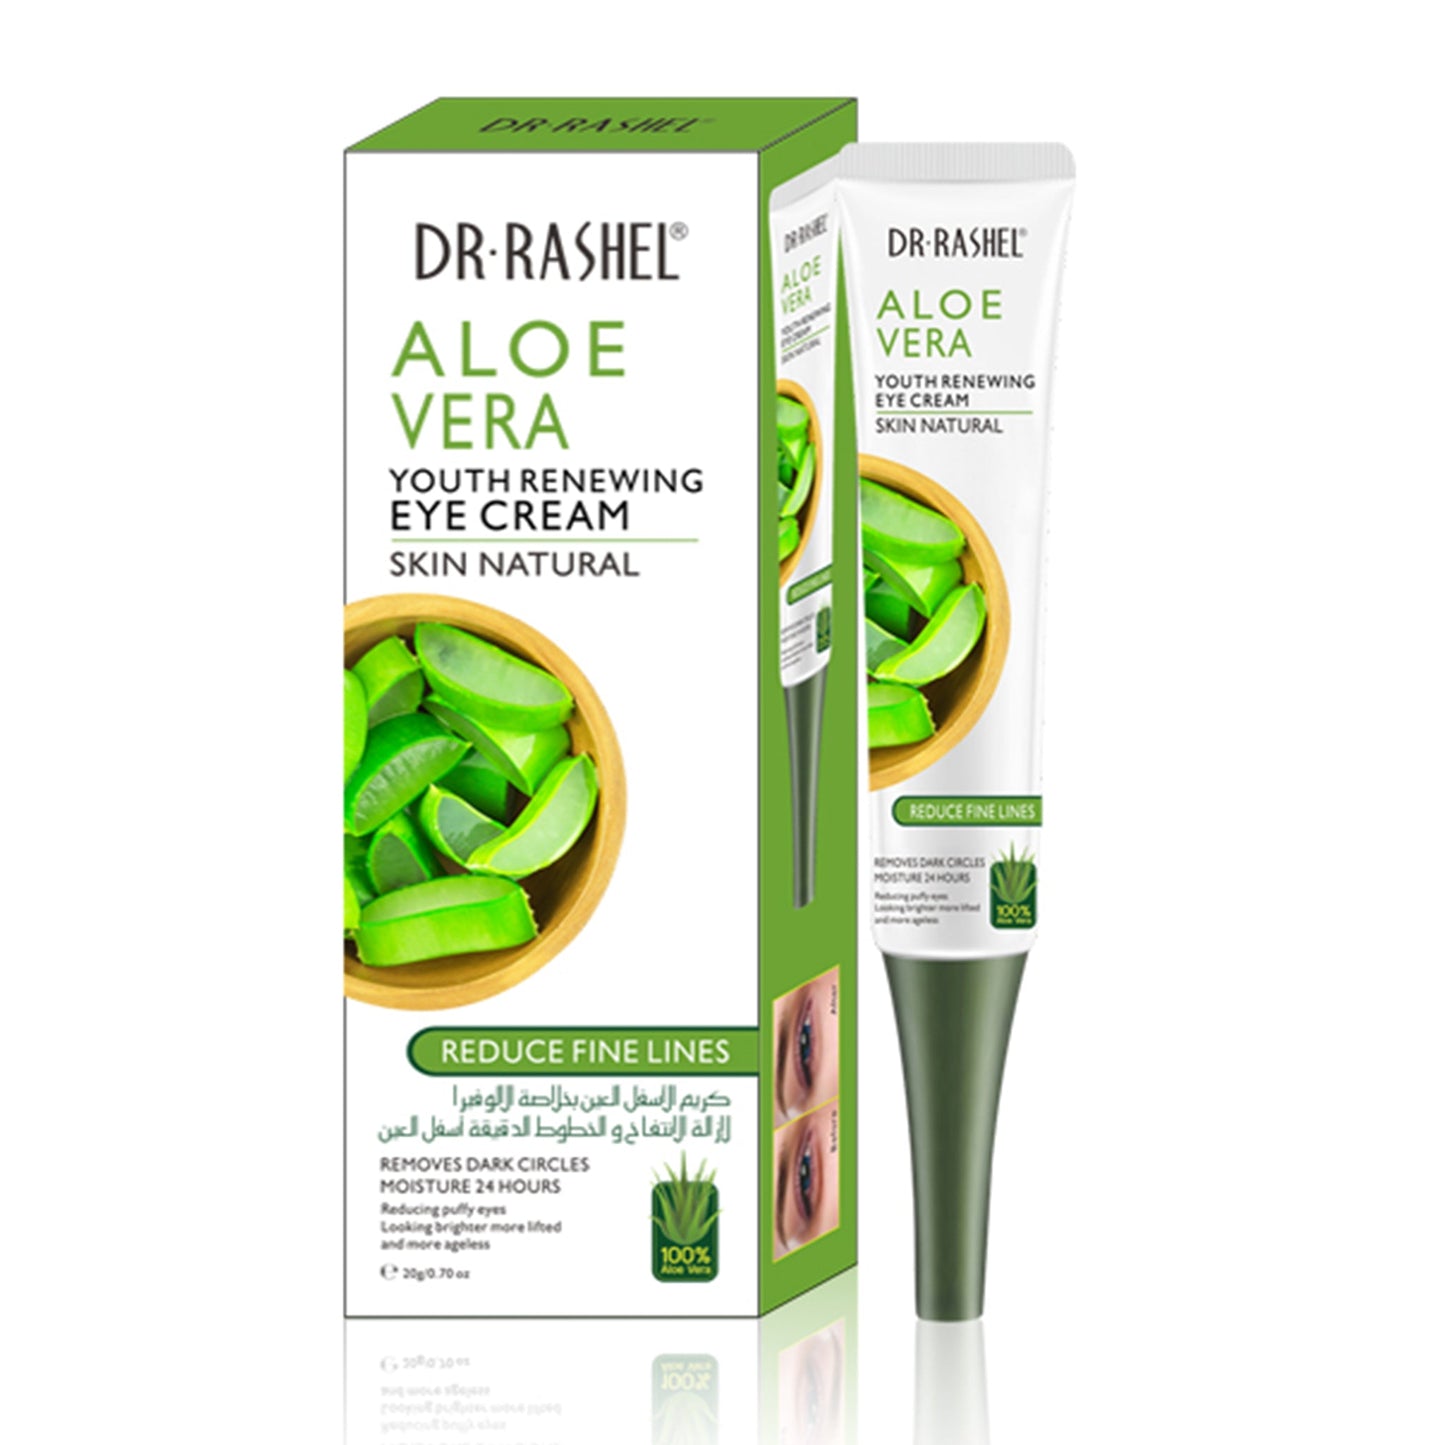 Dr. Rashel - Skin Natural Aloe Vera Youth Renewing Eye Cream - 20g